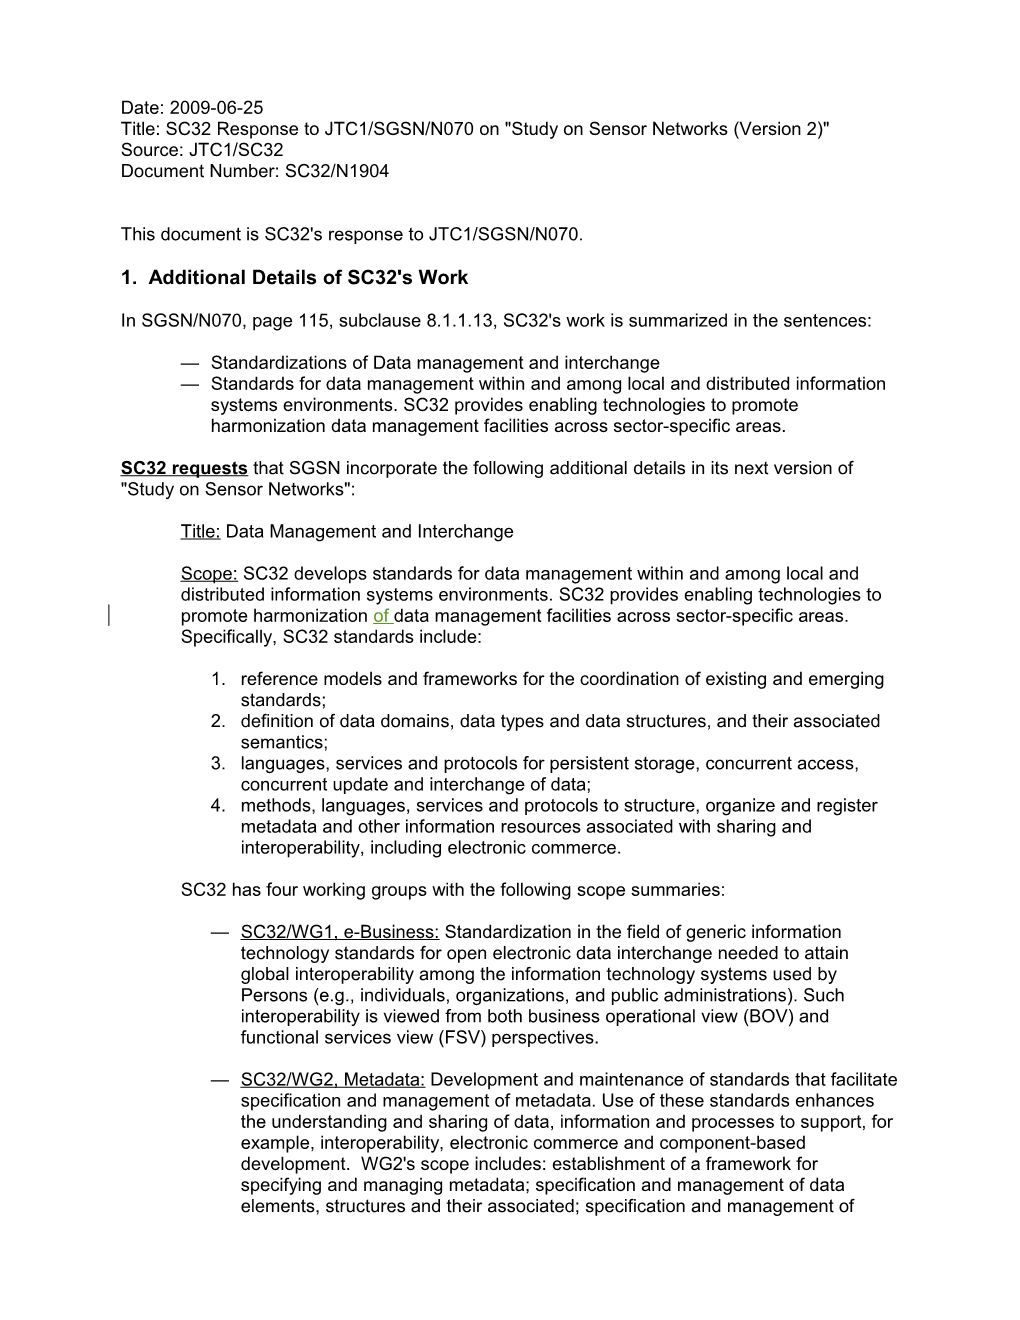 SC32 Response to JTC1/SGSN/N070 on Study on Sensor Networks (Version 2)